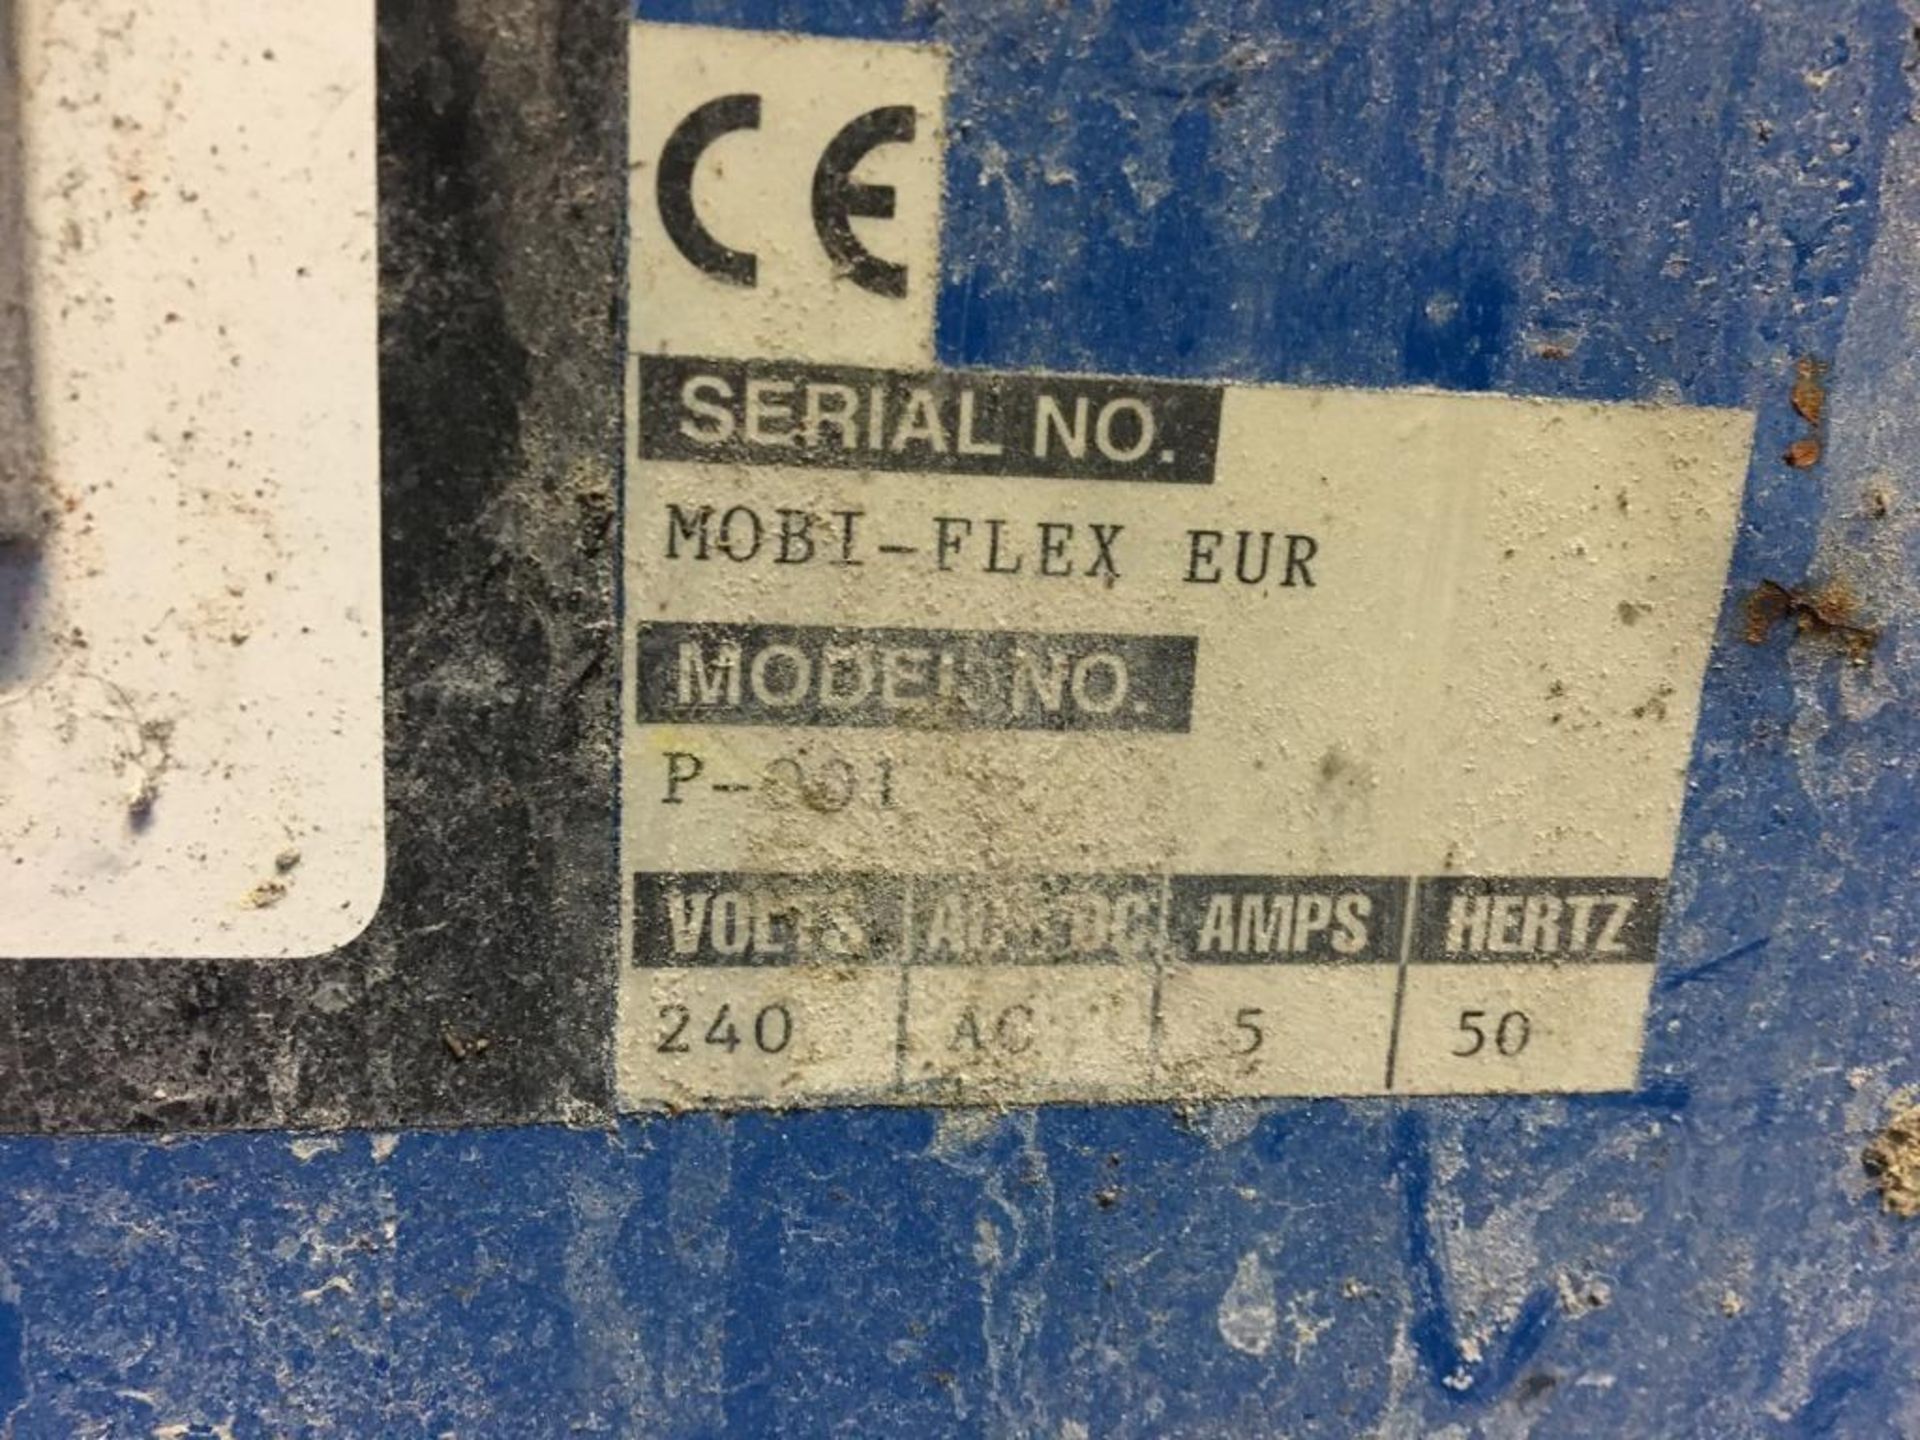 Mobile Mobi-Flex Eur model P-001 fume extractor - Image 2 of 2